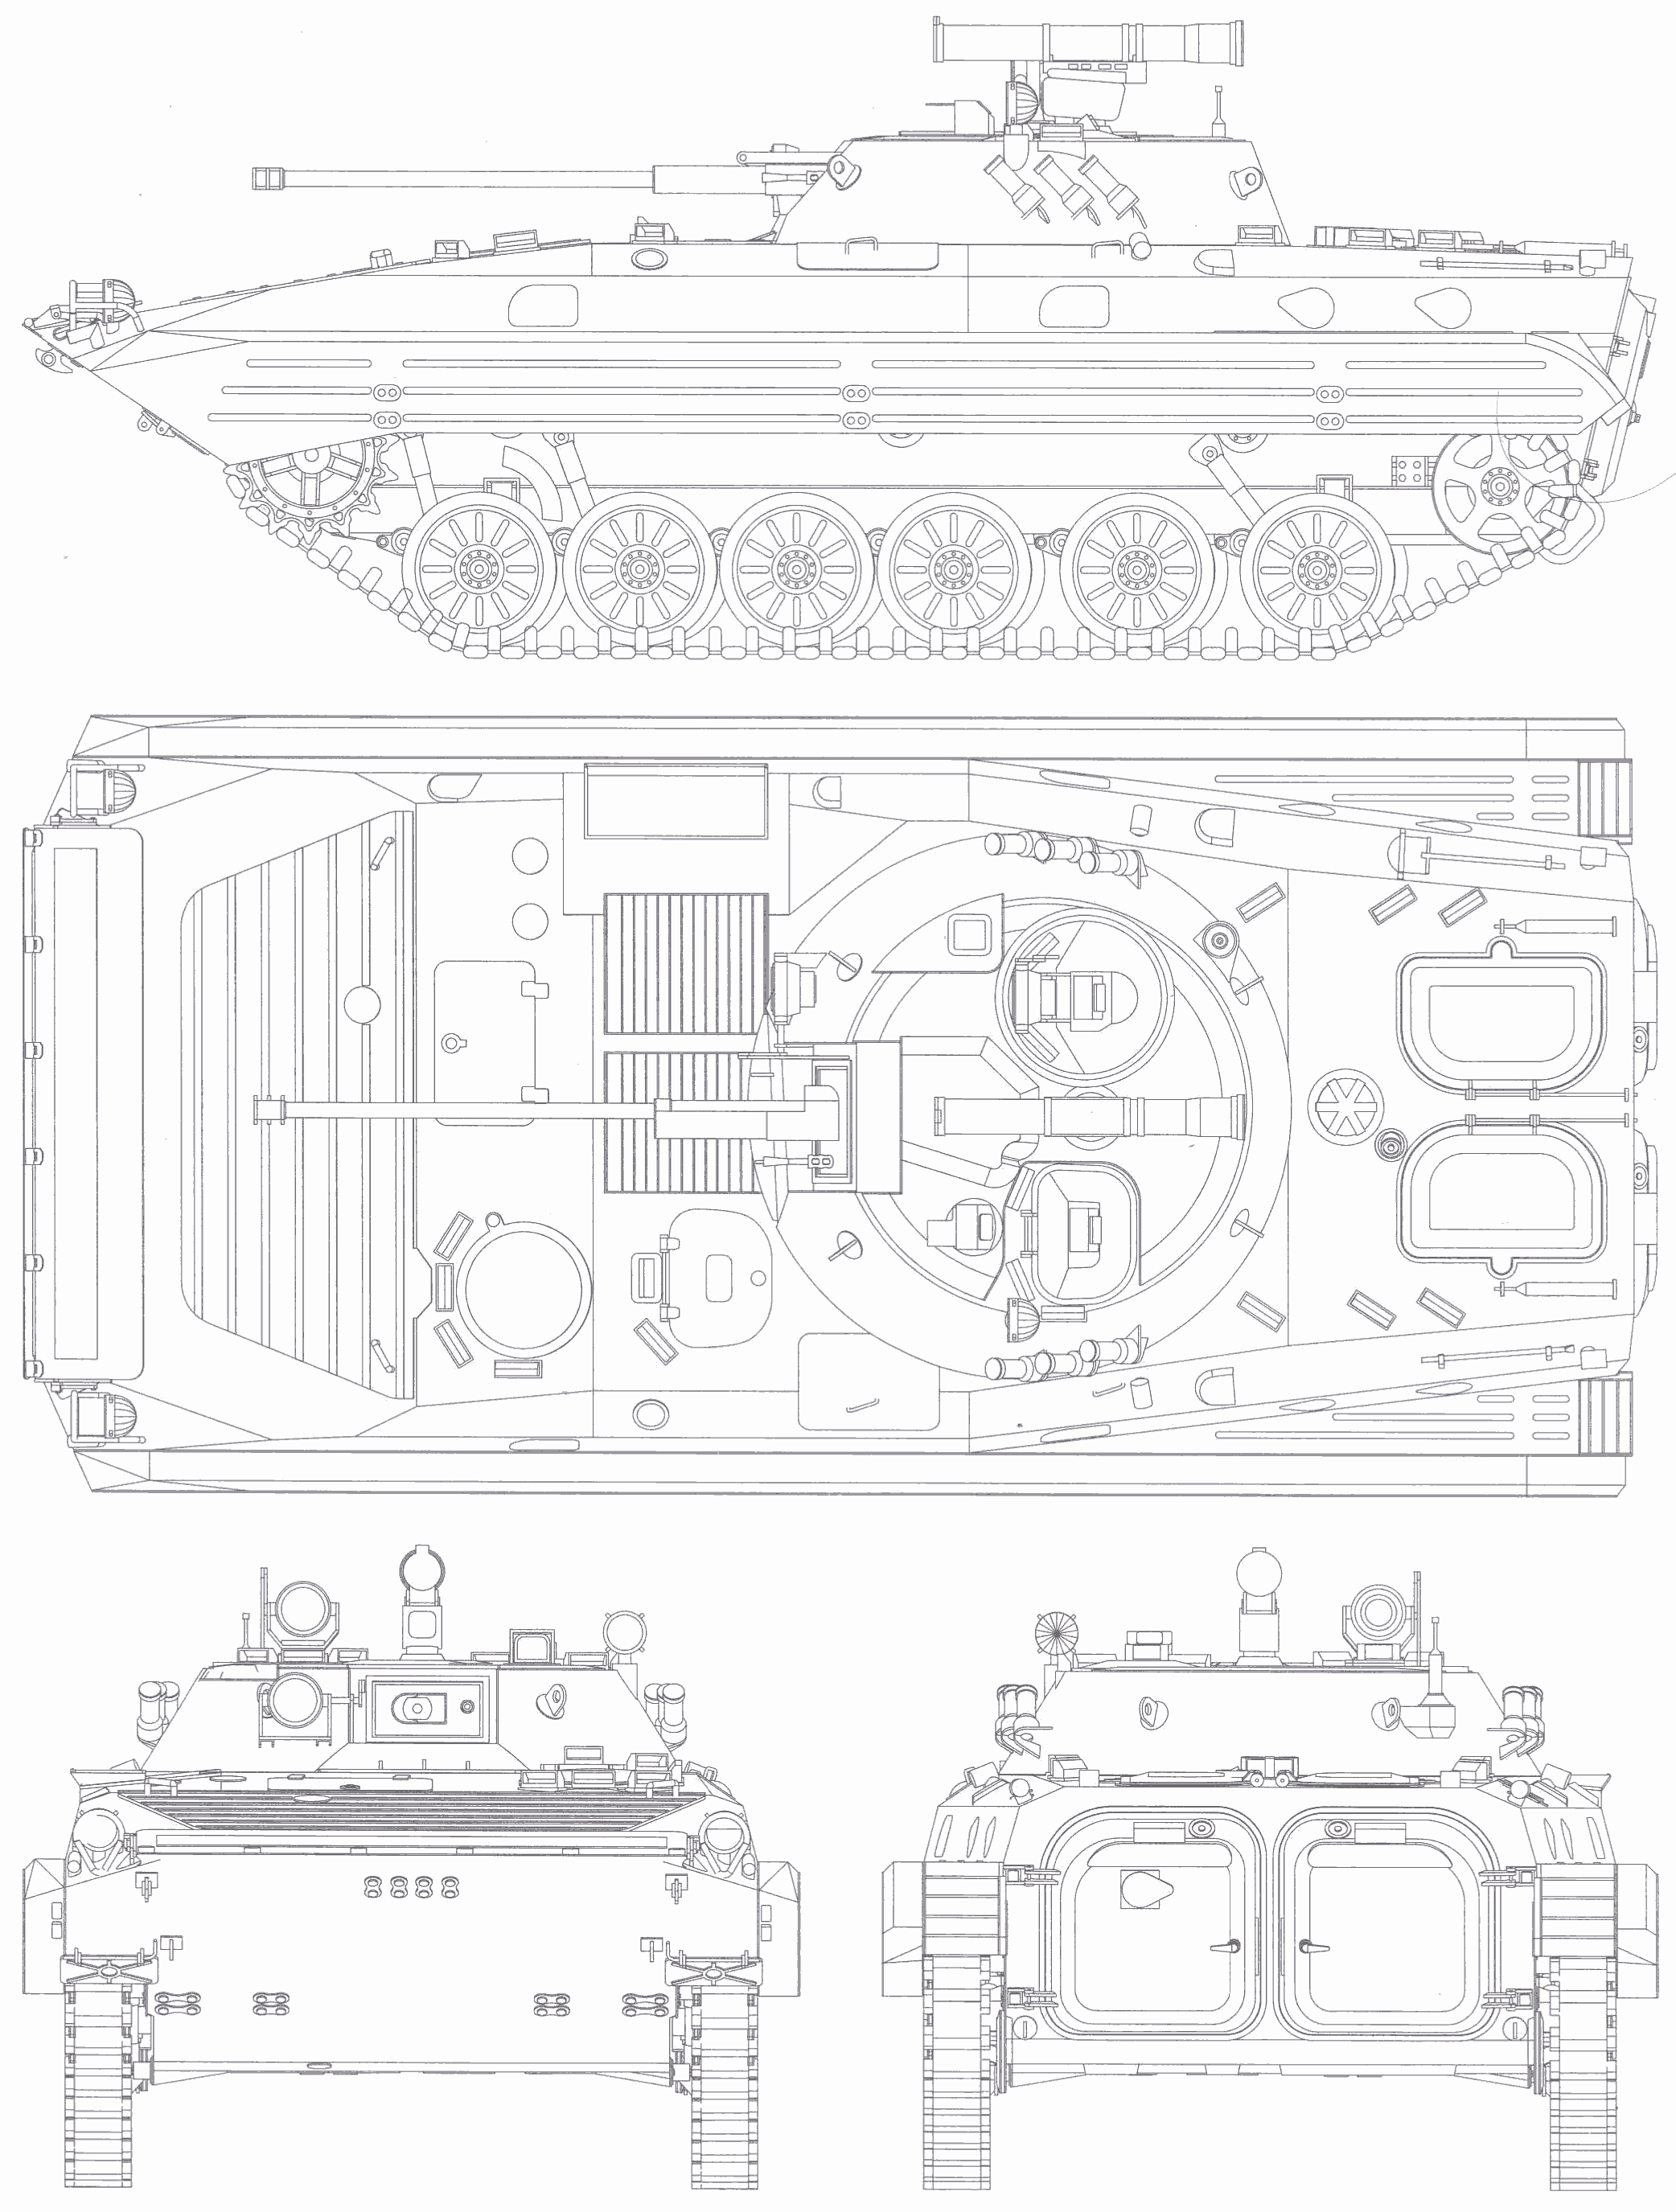 BMP-2 blueprint